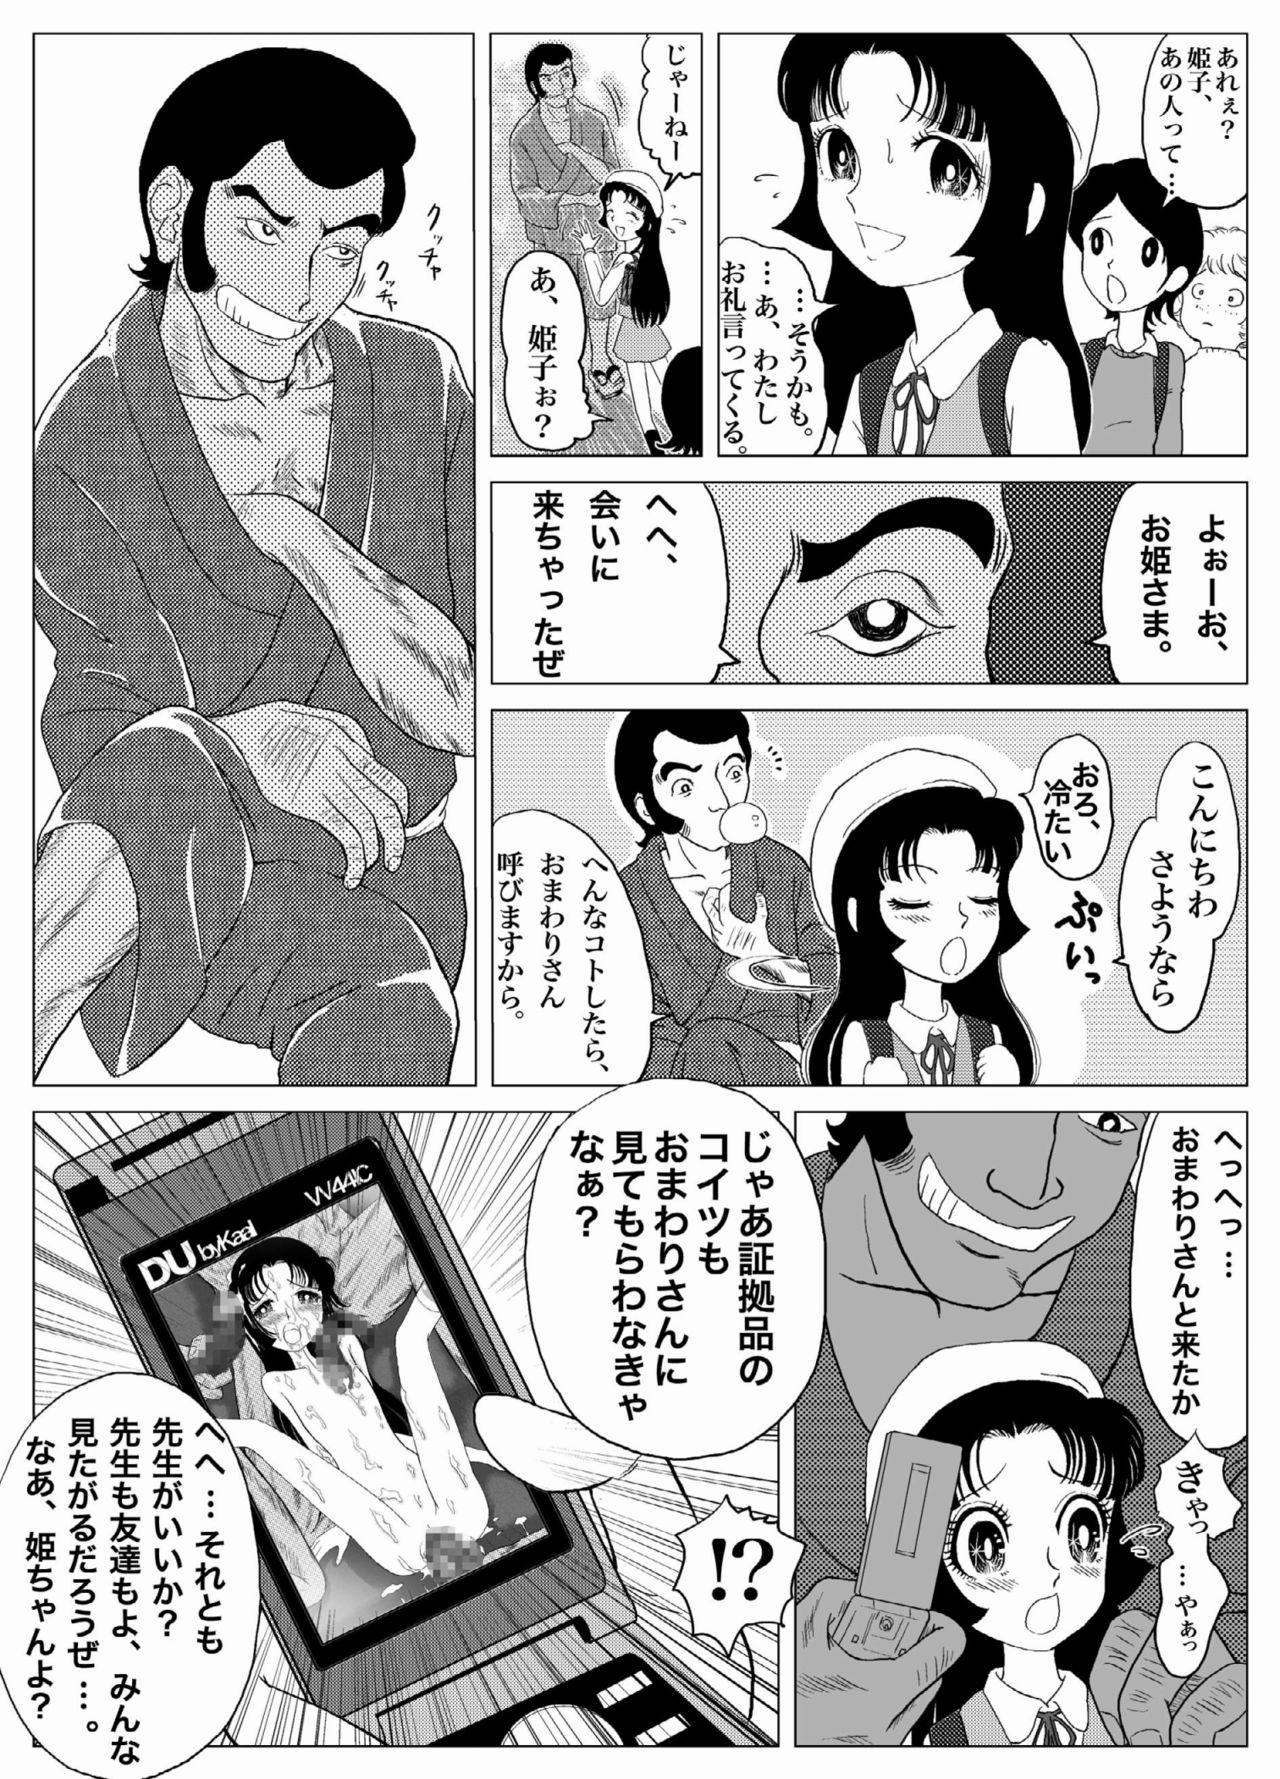 Women Uwasa no Goreijo - HIMEKO Still in the WRONG World Ex Girlfriend - Page 3